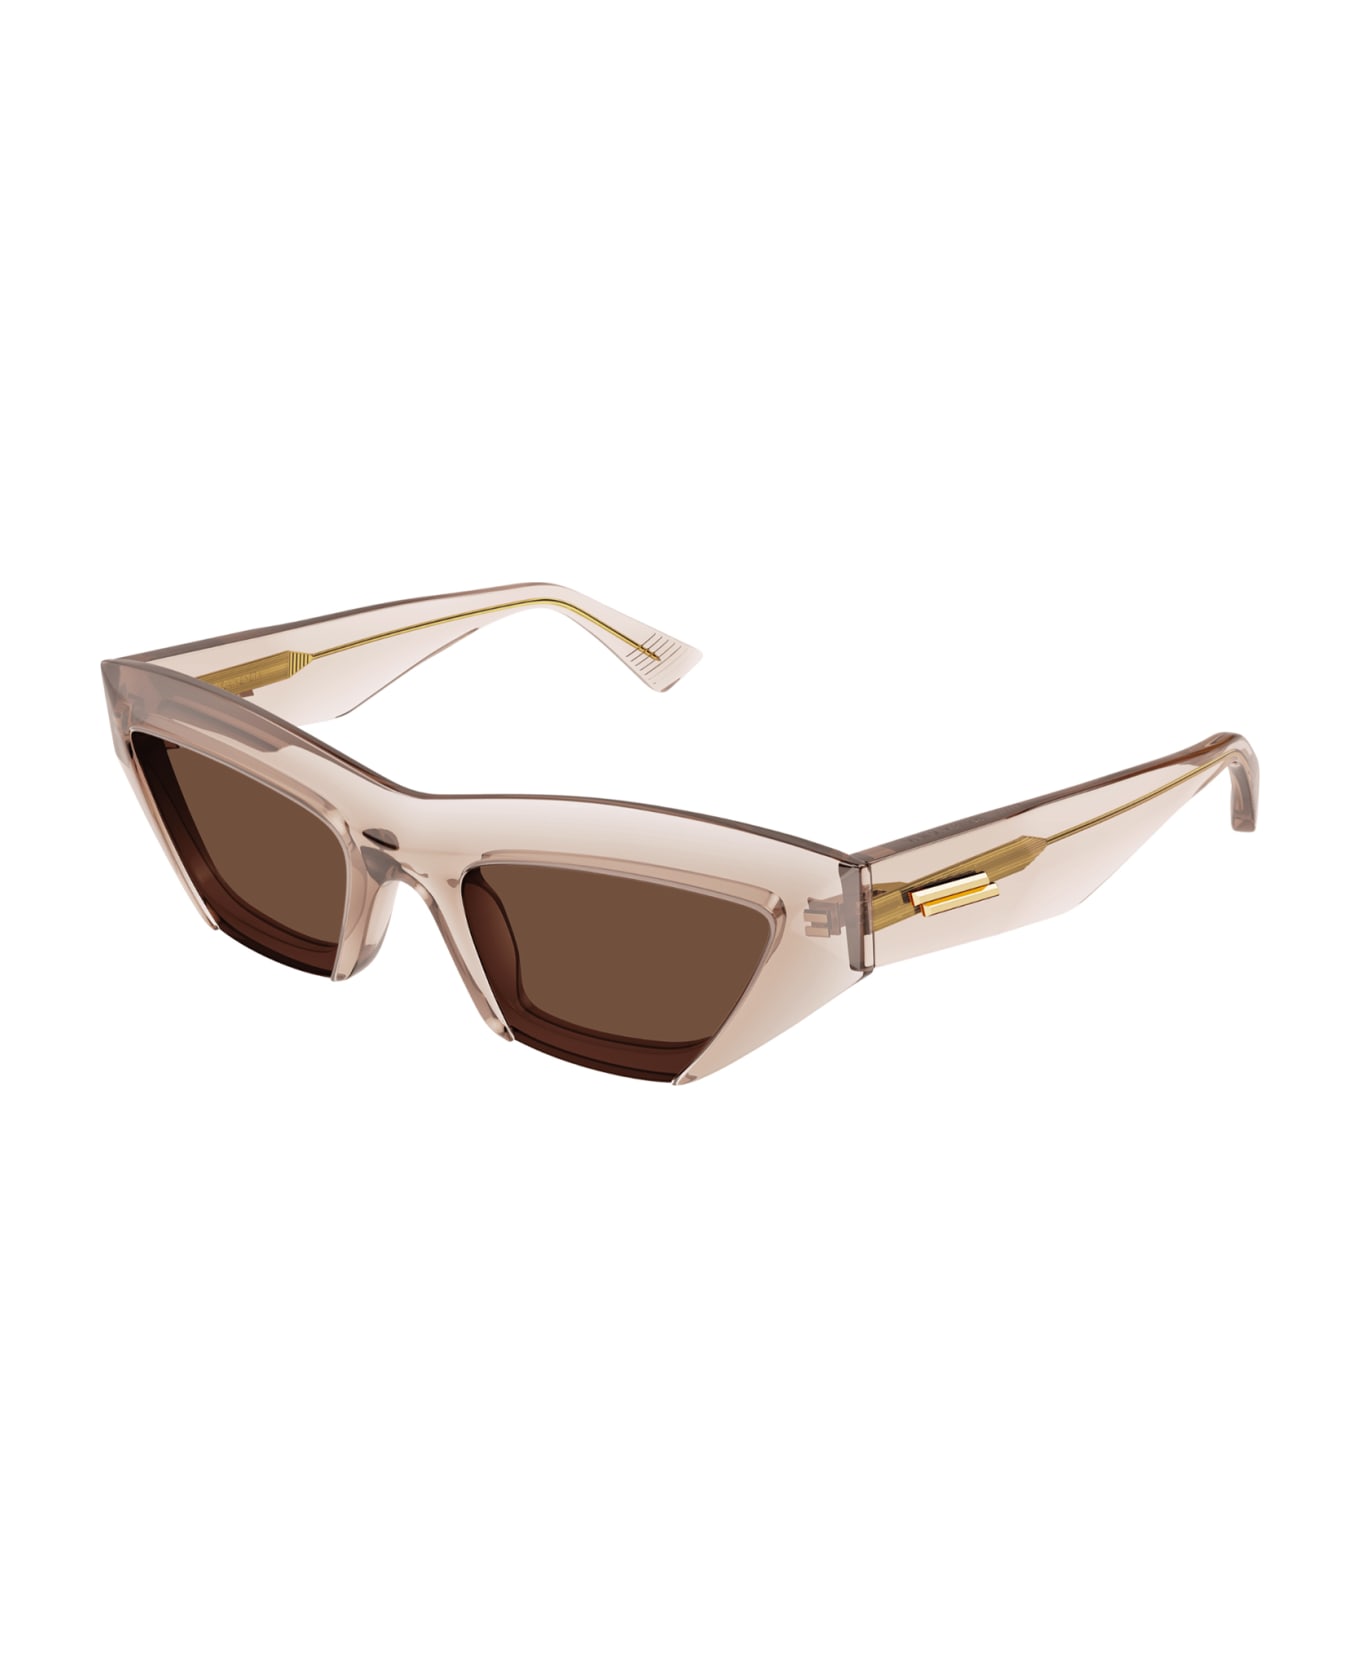 Bottega Veneta Eyewear Bv1219s Sunglasses - 003 nude nude brown サングラス